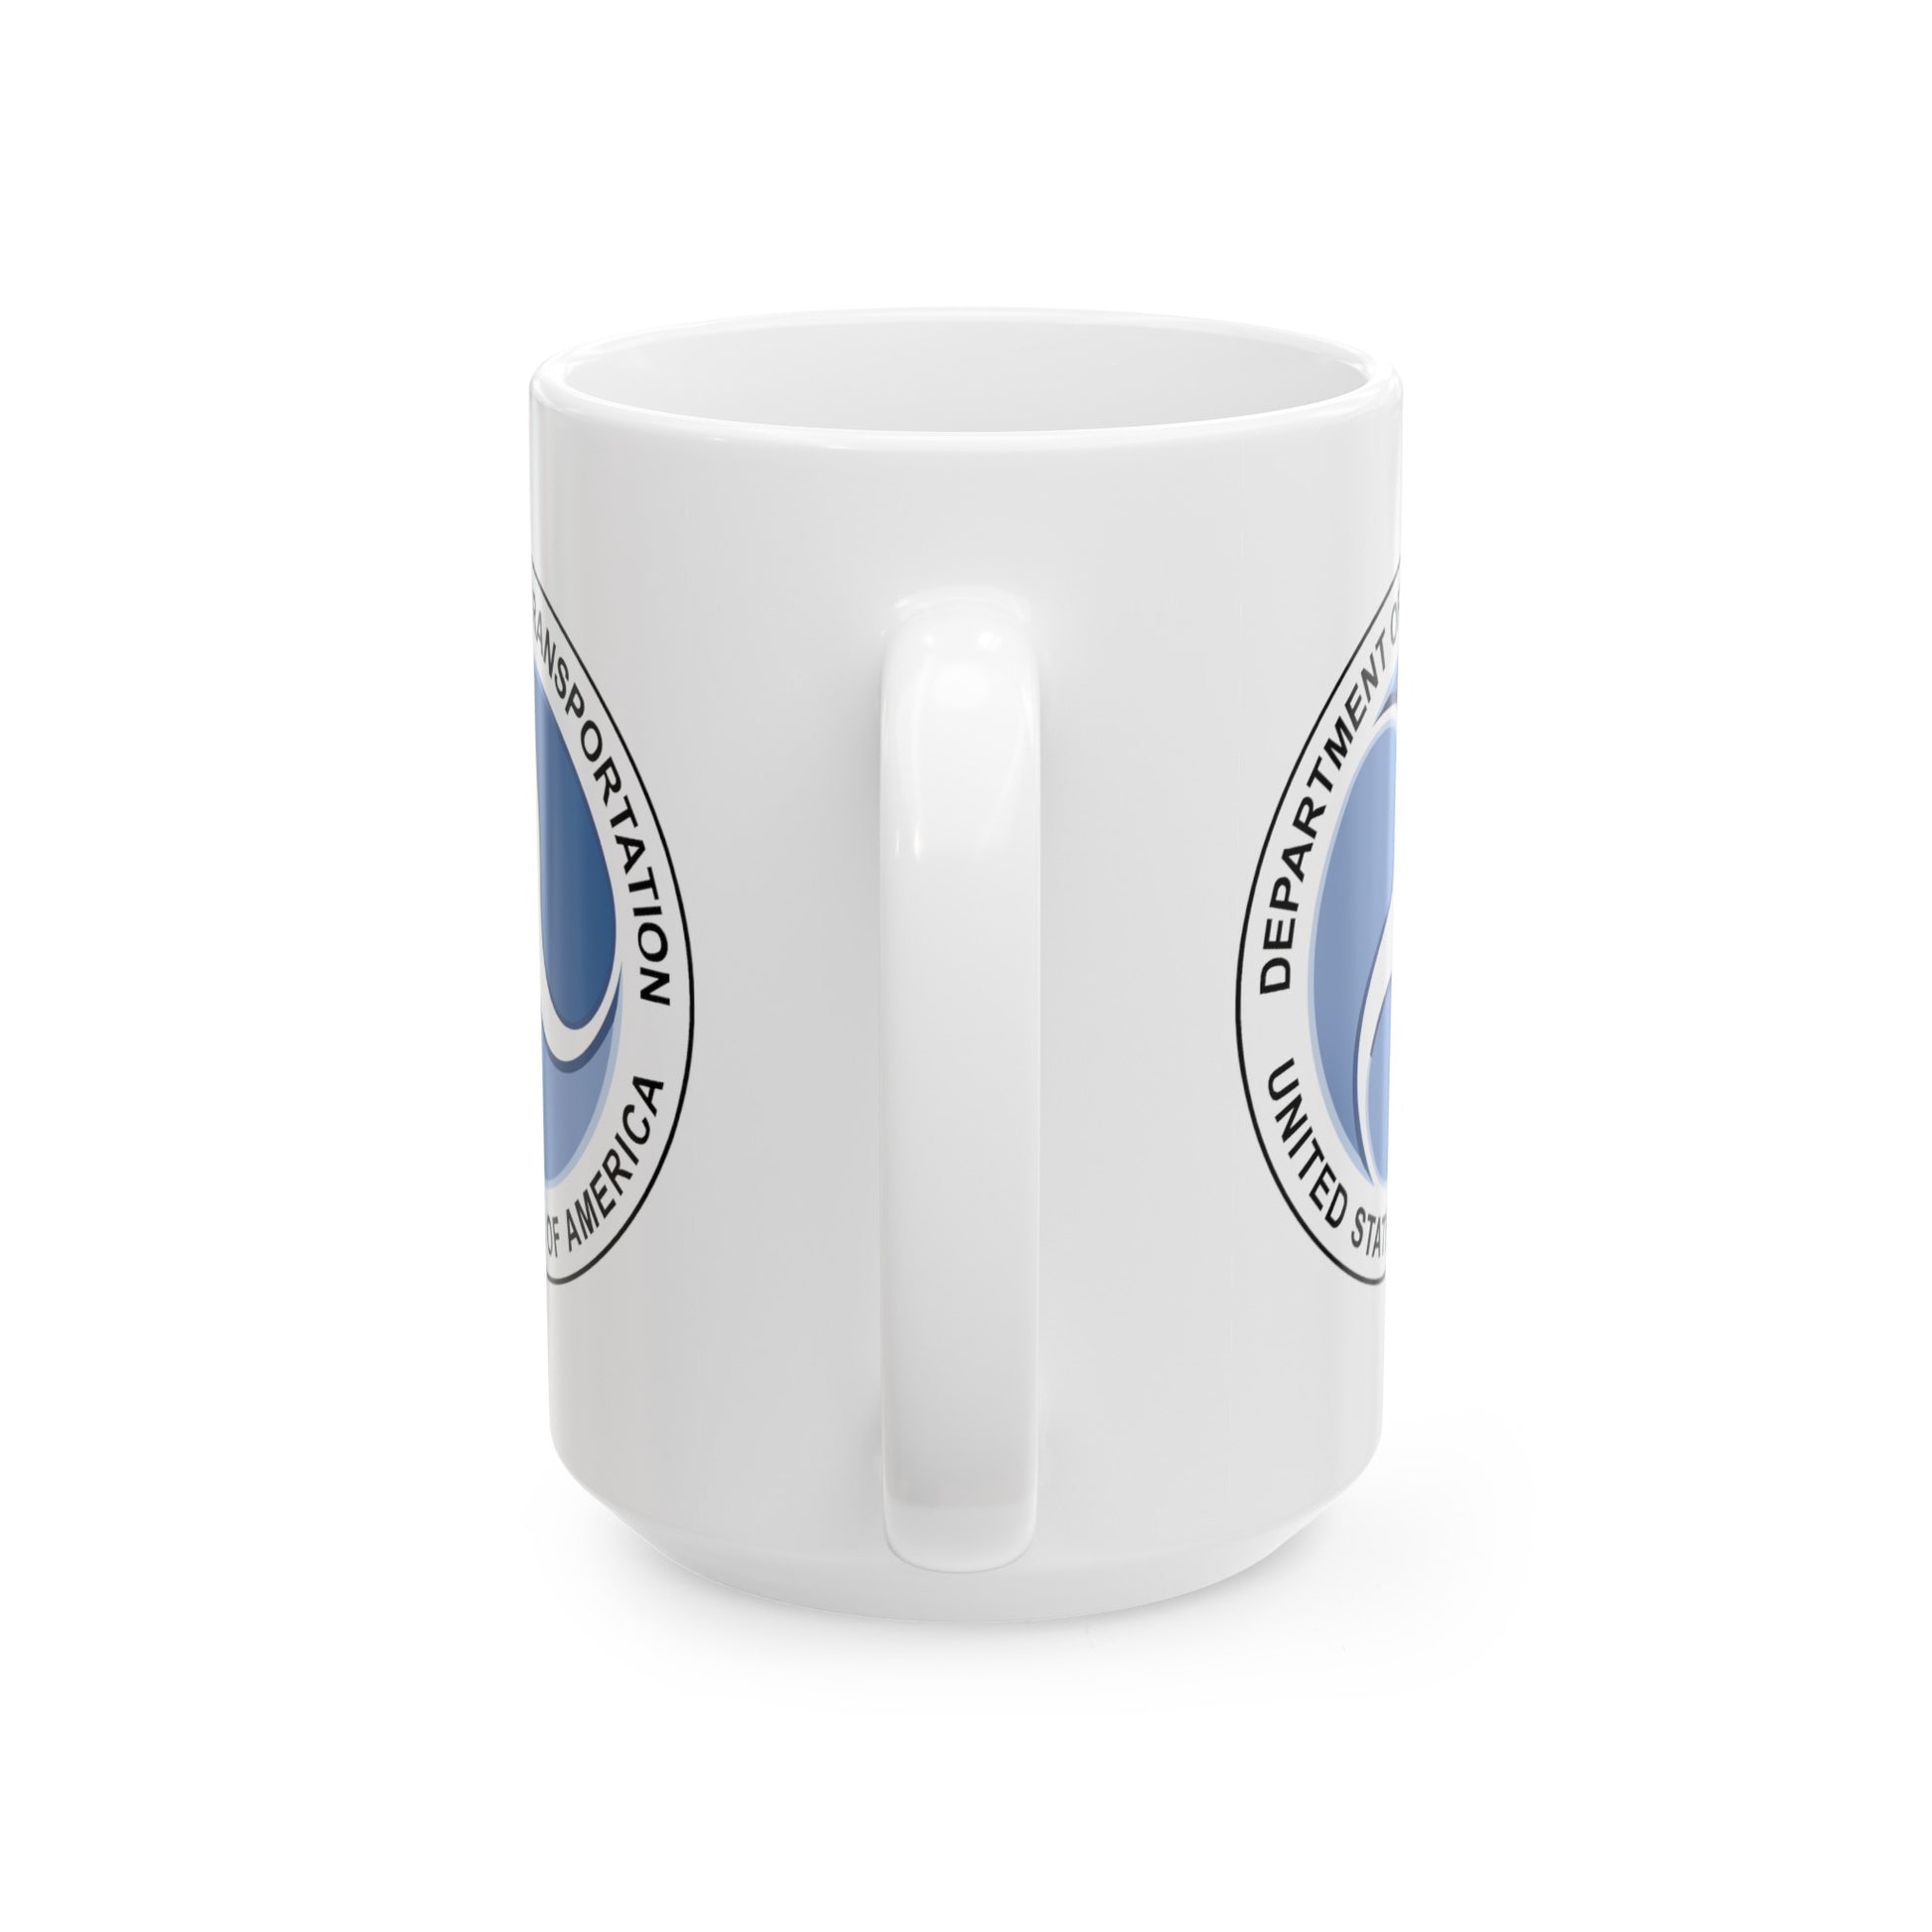 Department of Transportation Coffee Mug - Double Sided White Ceramic 15oz by TheGlassyLass.com